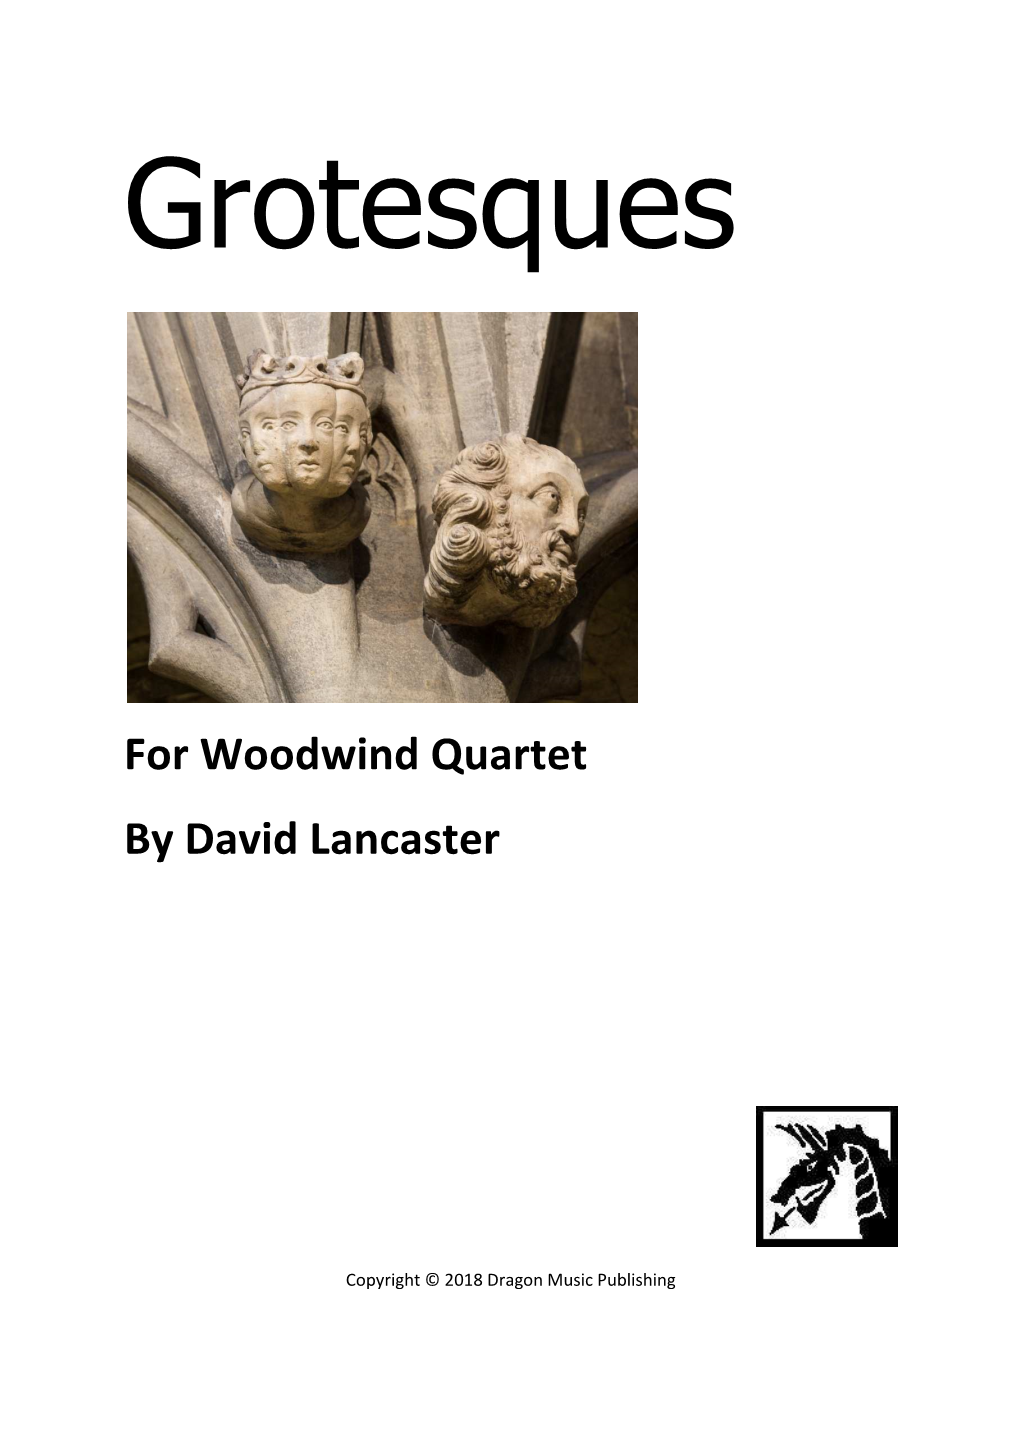 For Woodwind Quartet by David Lancaster